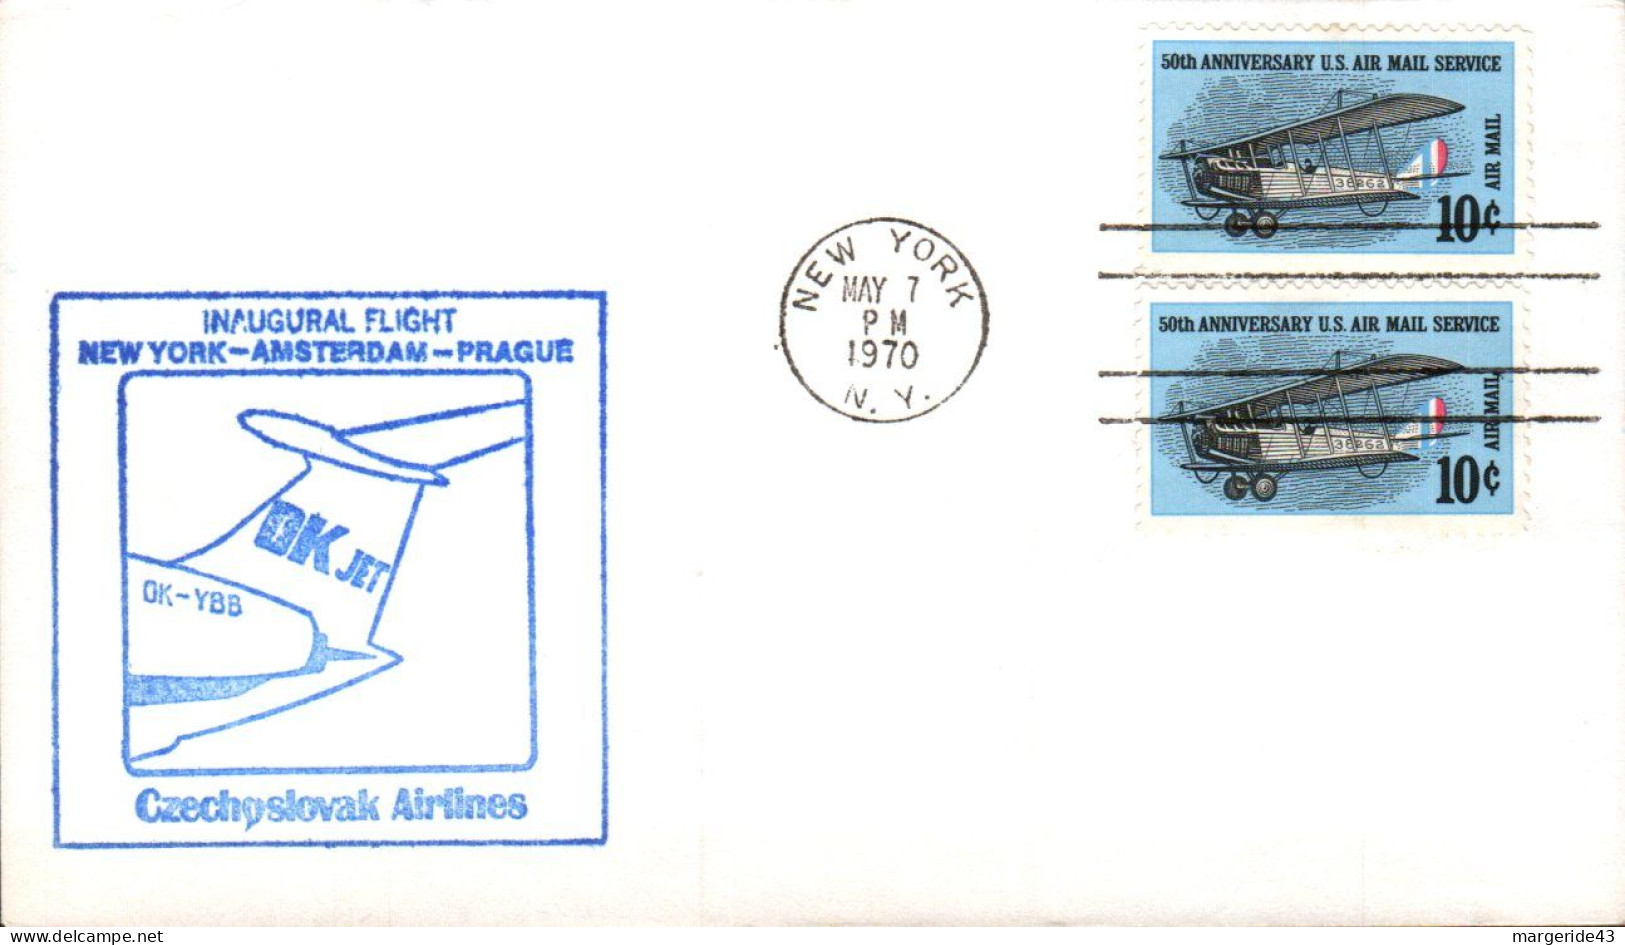 USA ETATS UNIS VOL INAUGURAL CZECHOSLOVAK AIRLINES NEW YORK-AMSTERDAM-PRAGUE 1970 - FDC